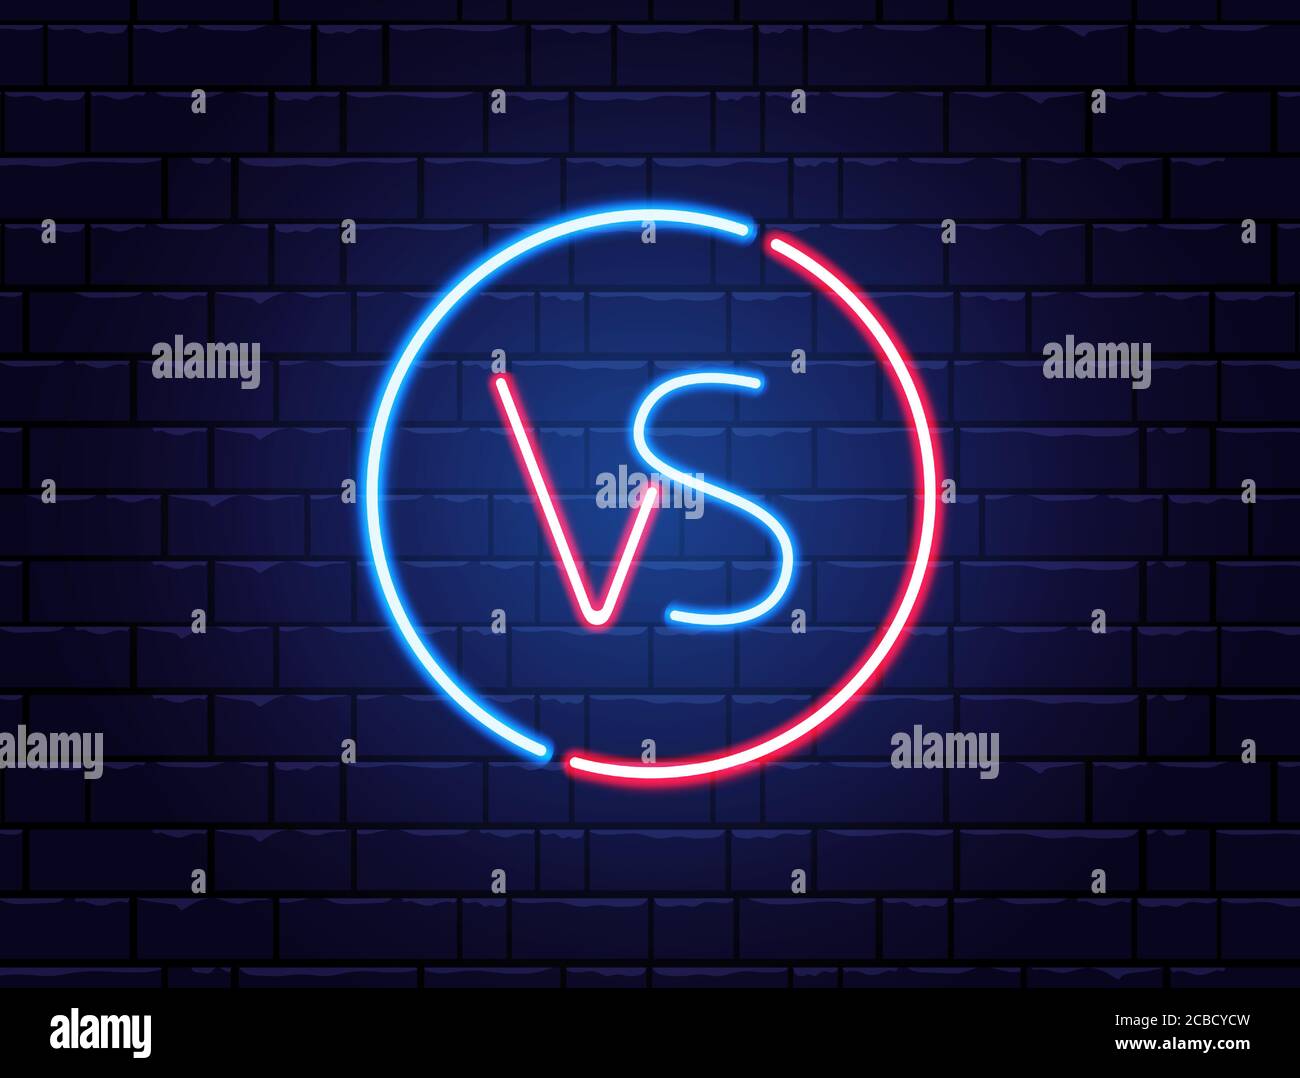 Versus logo neon. Red vs blue team. Battle headline banner. Fight competition. Match, game design element. Neon bright signboard. Vector illustration. Stock Vector